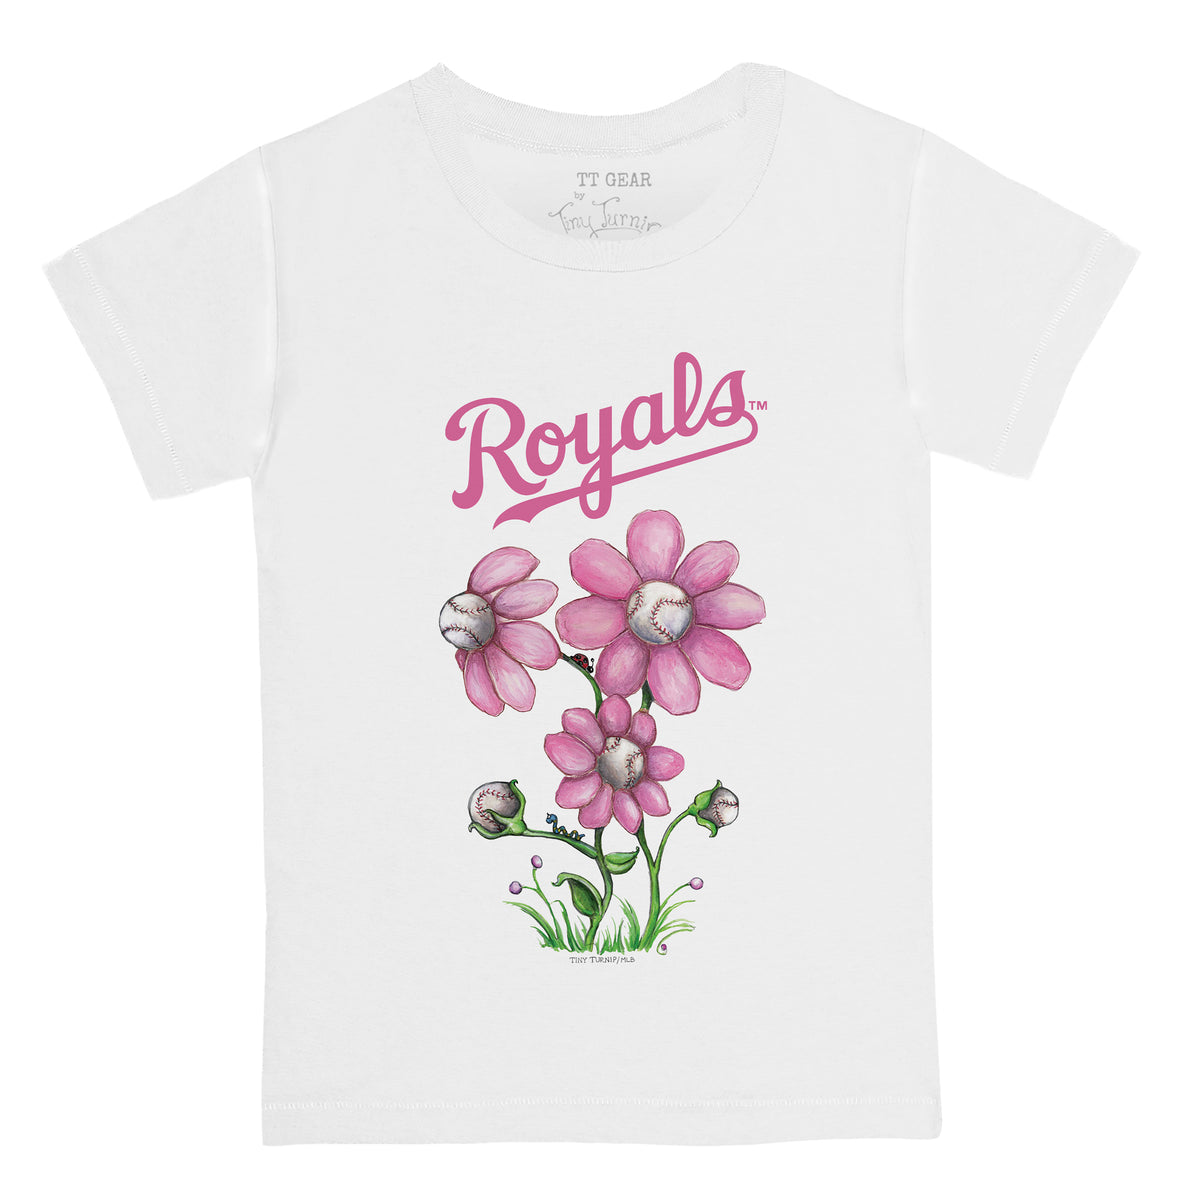 Tiny Turnip Kansas City Royals Baseball Heart Banner Tee Shirt Women's XL / Royal Blue